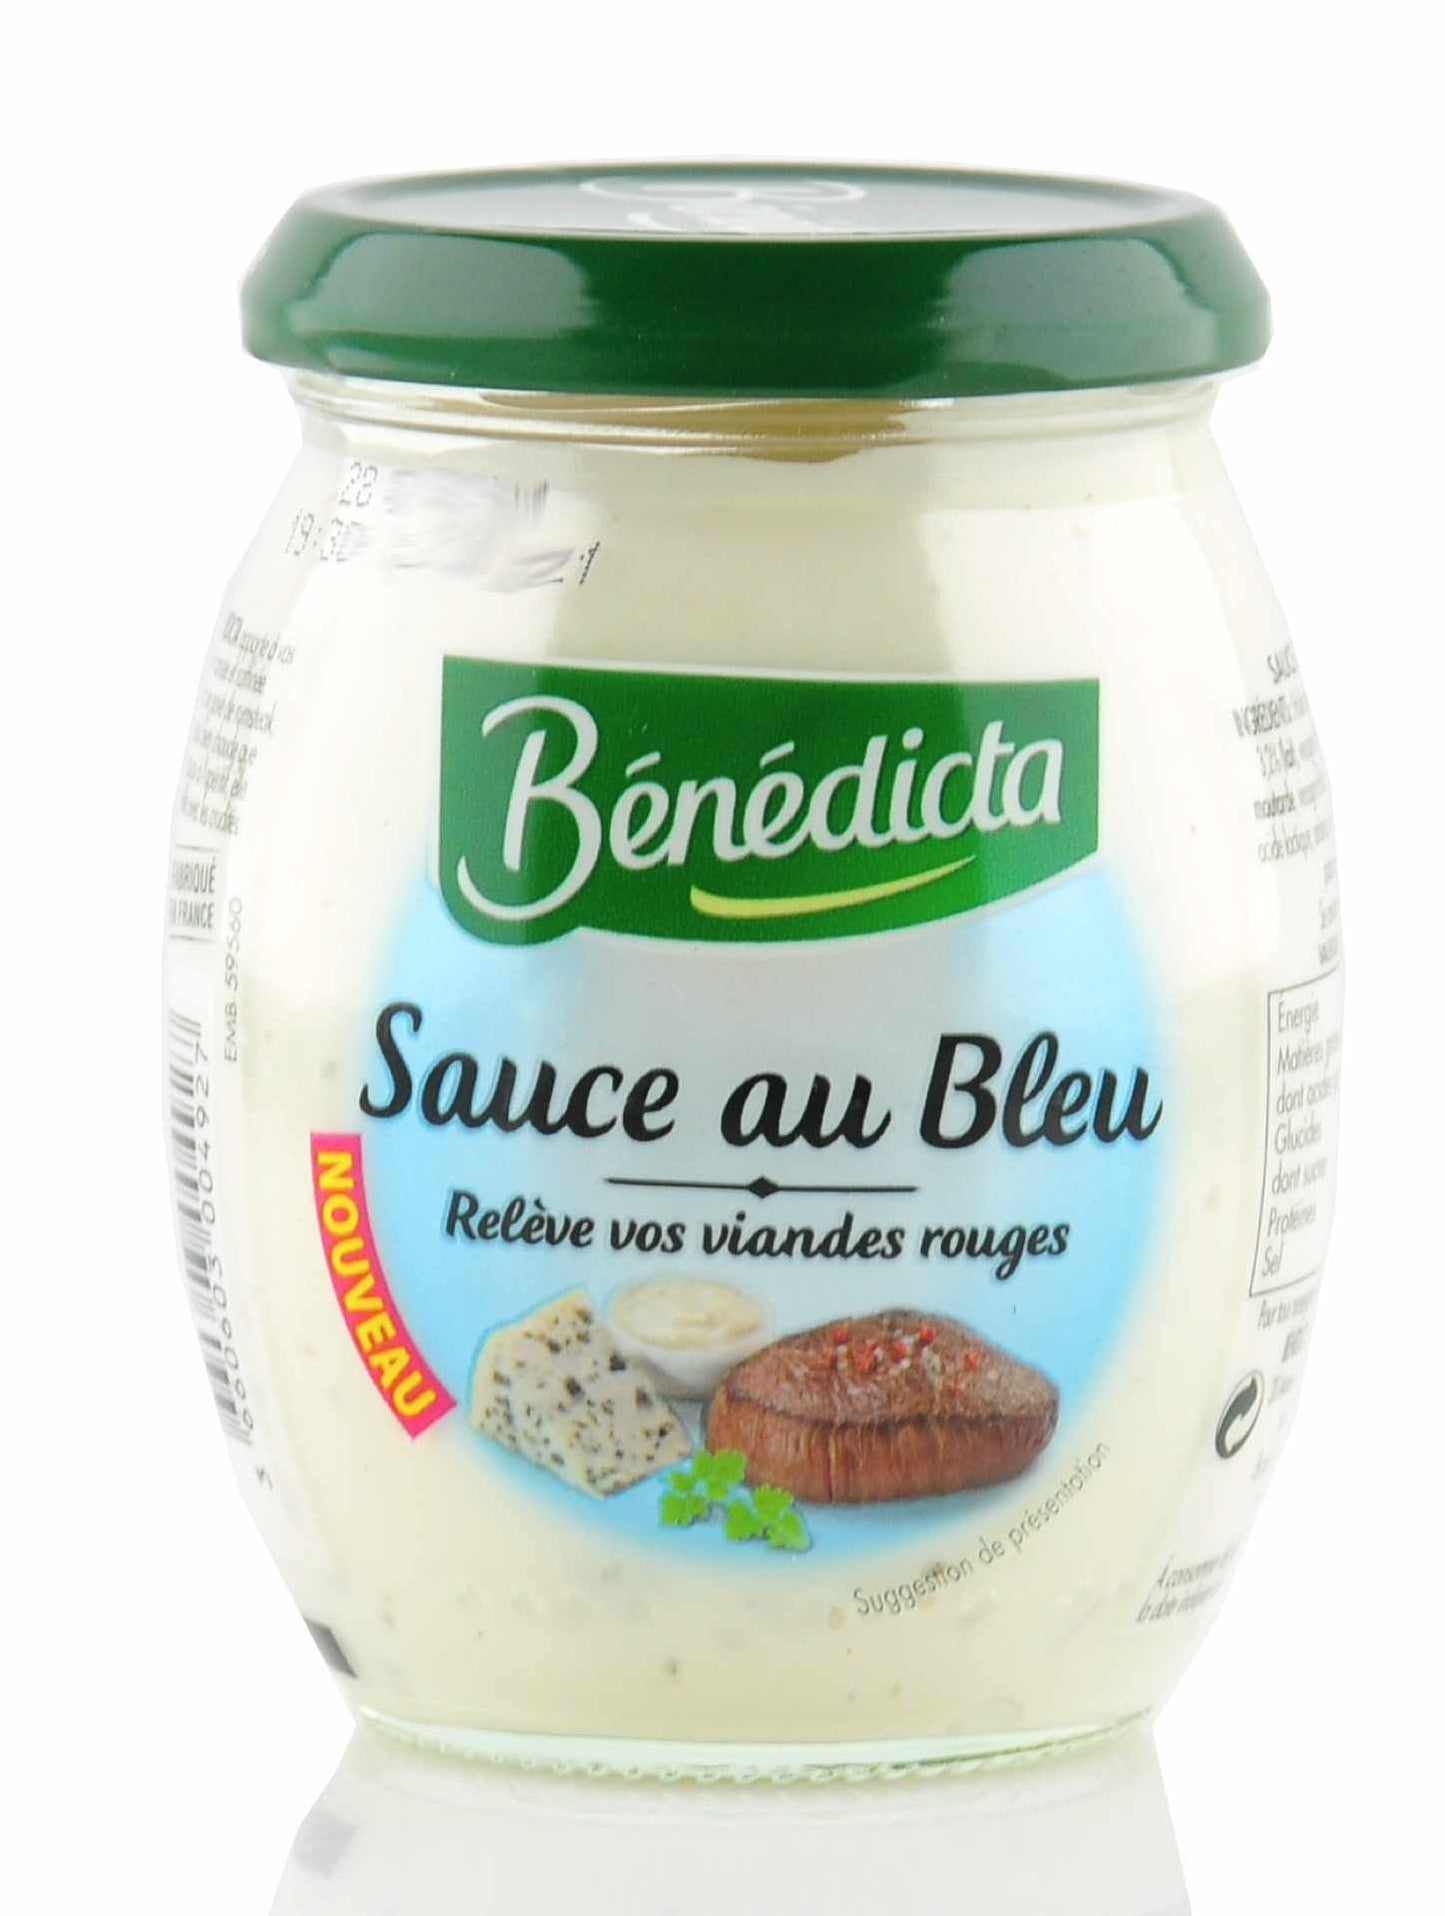 Benedicta "Sauce au Bleu" Sauce mit Roquefort im 260g Glas